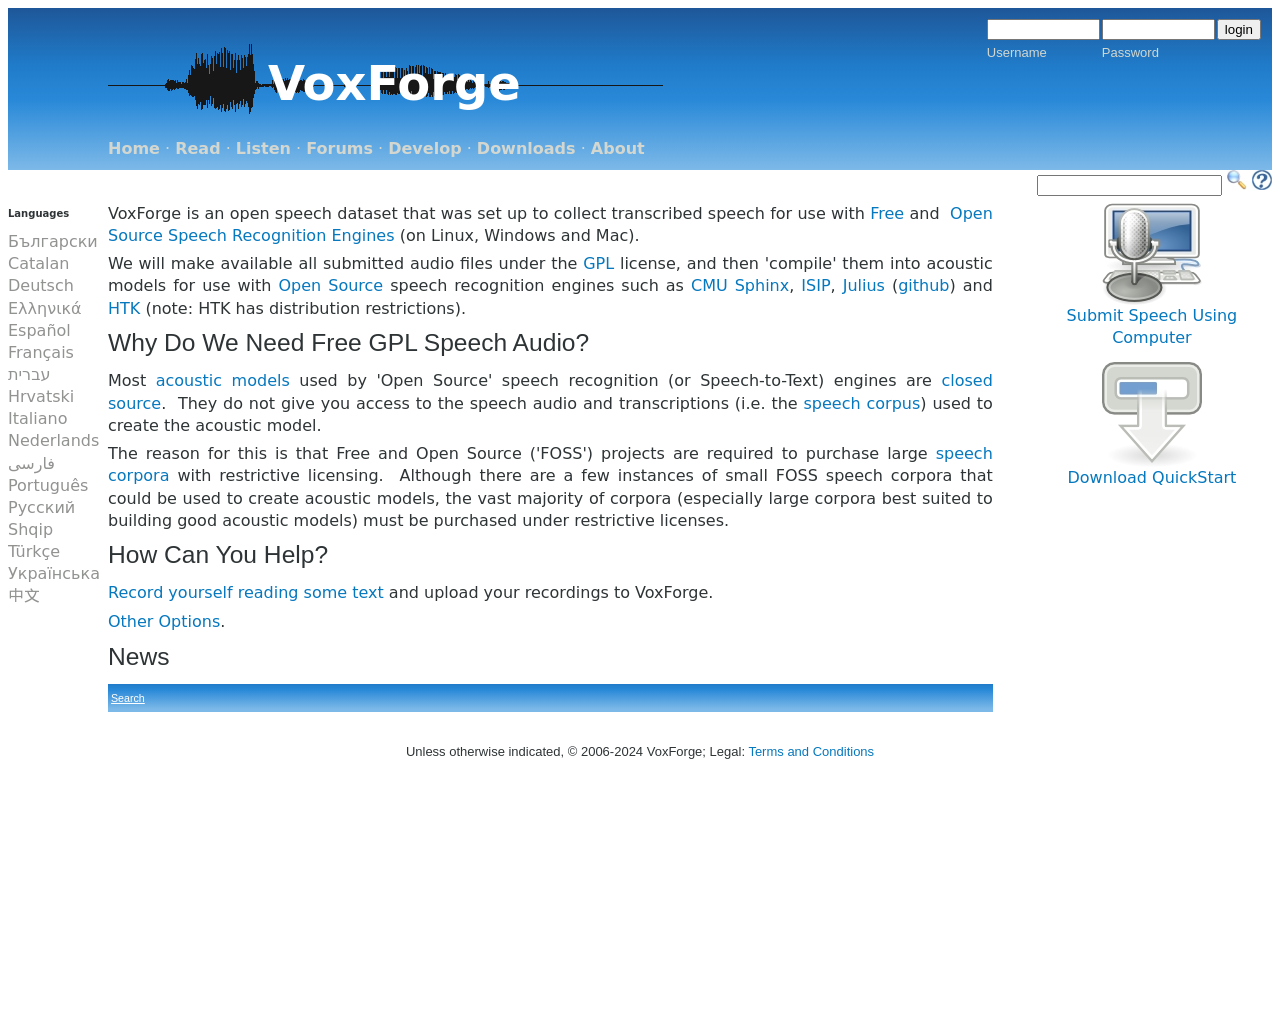 voxforge.org